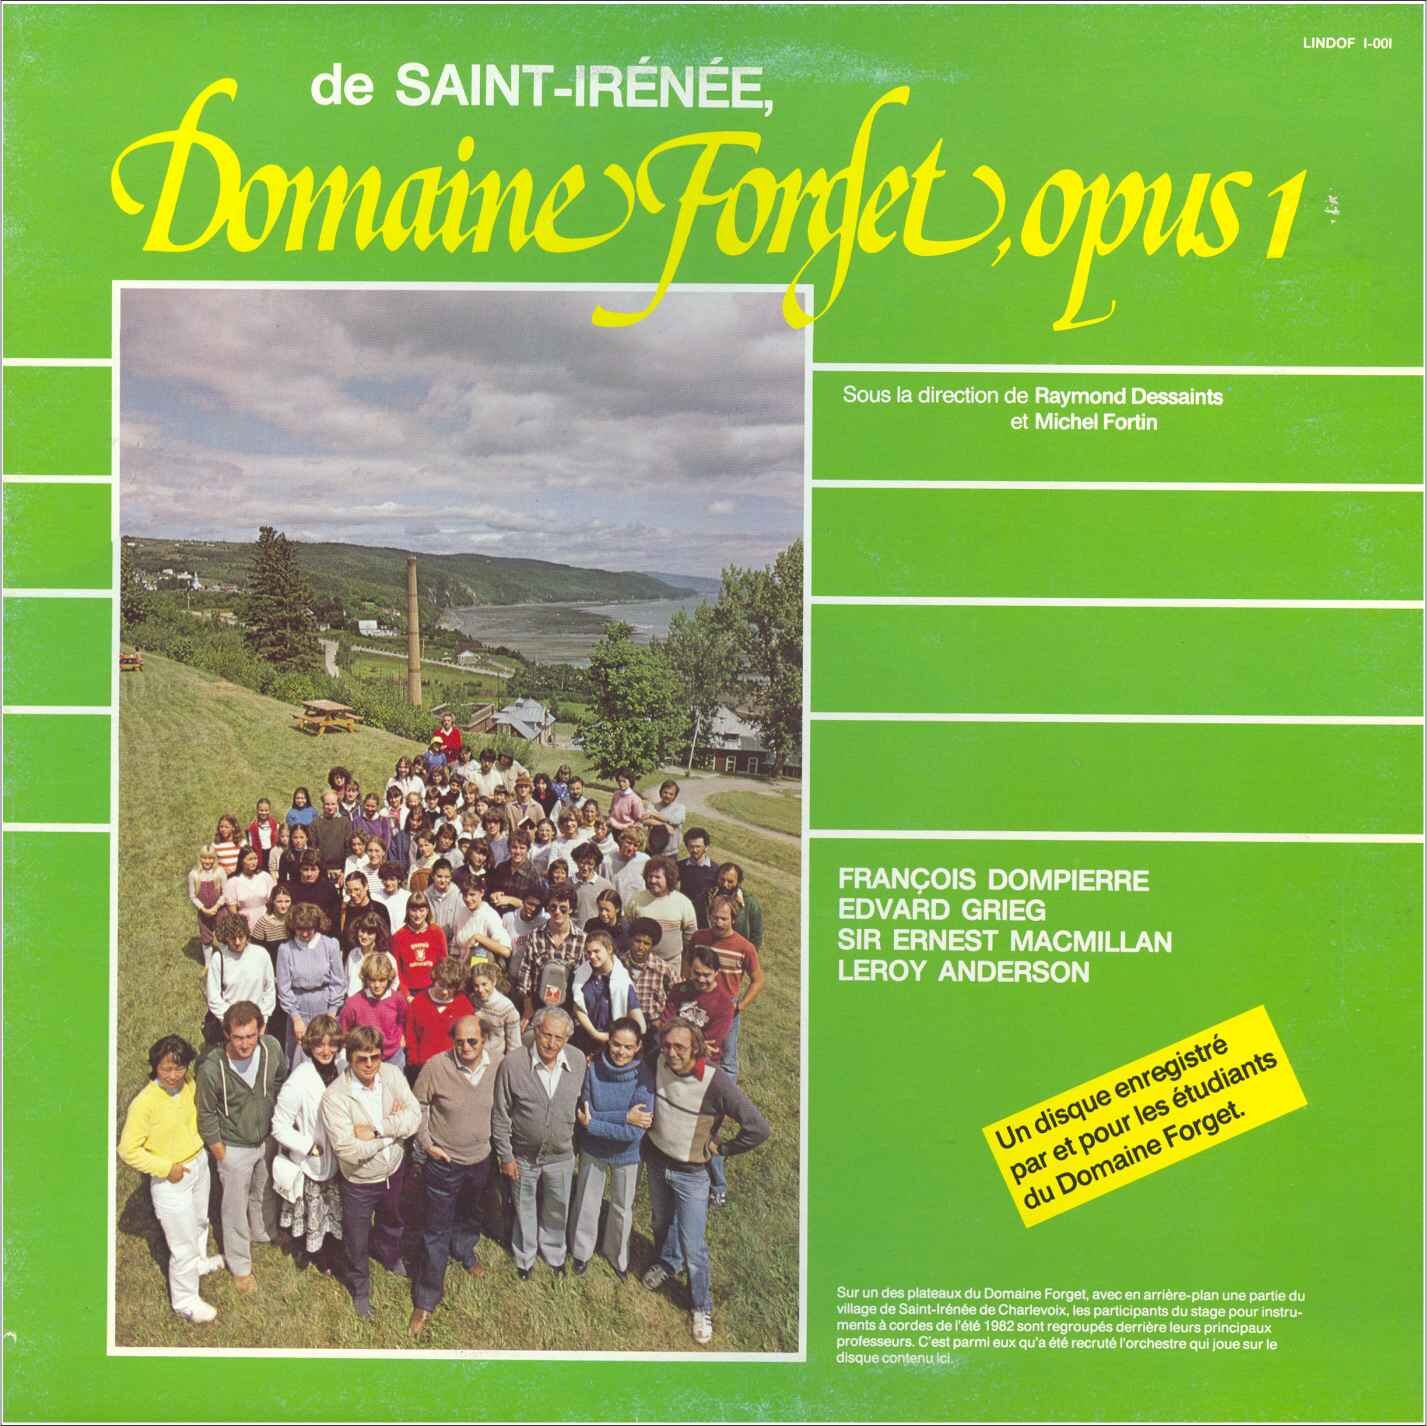 1984-Domaine Forget, opus 1.jpg